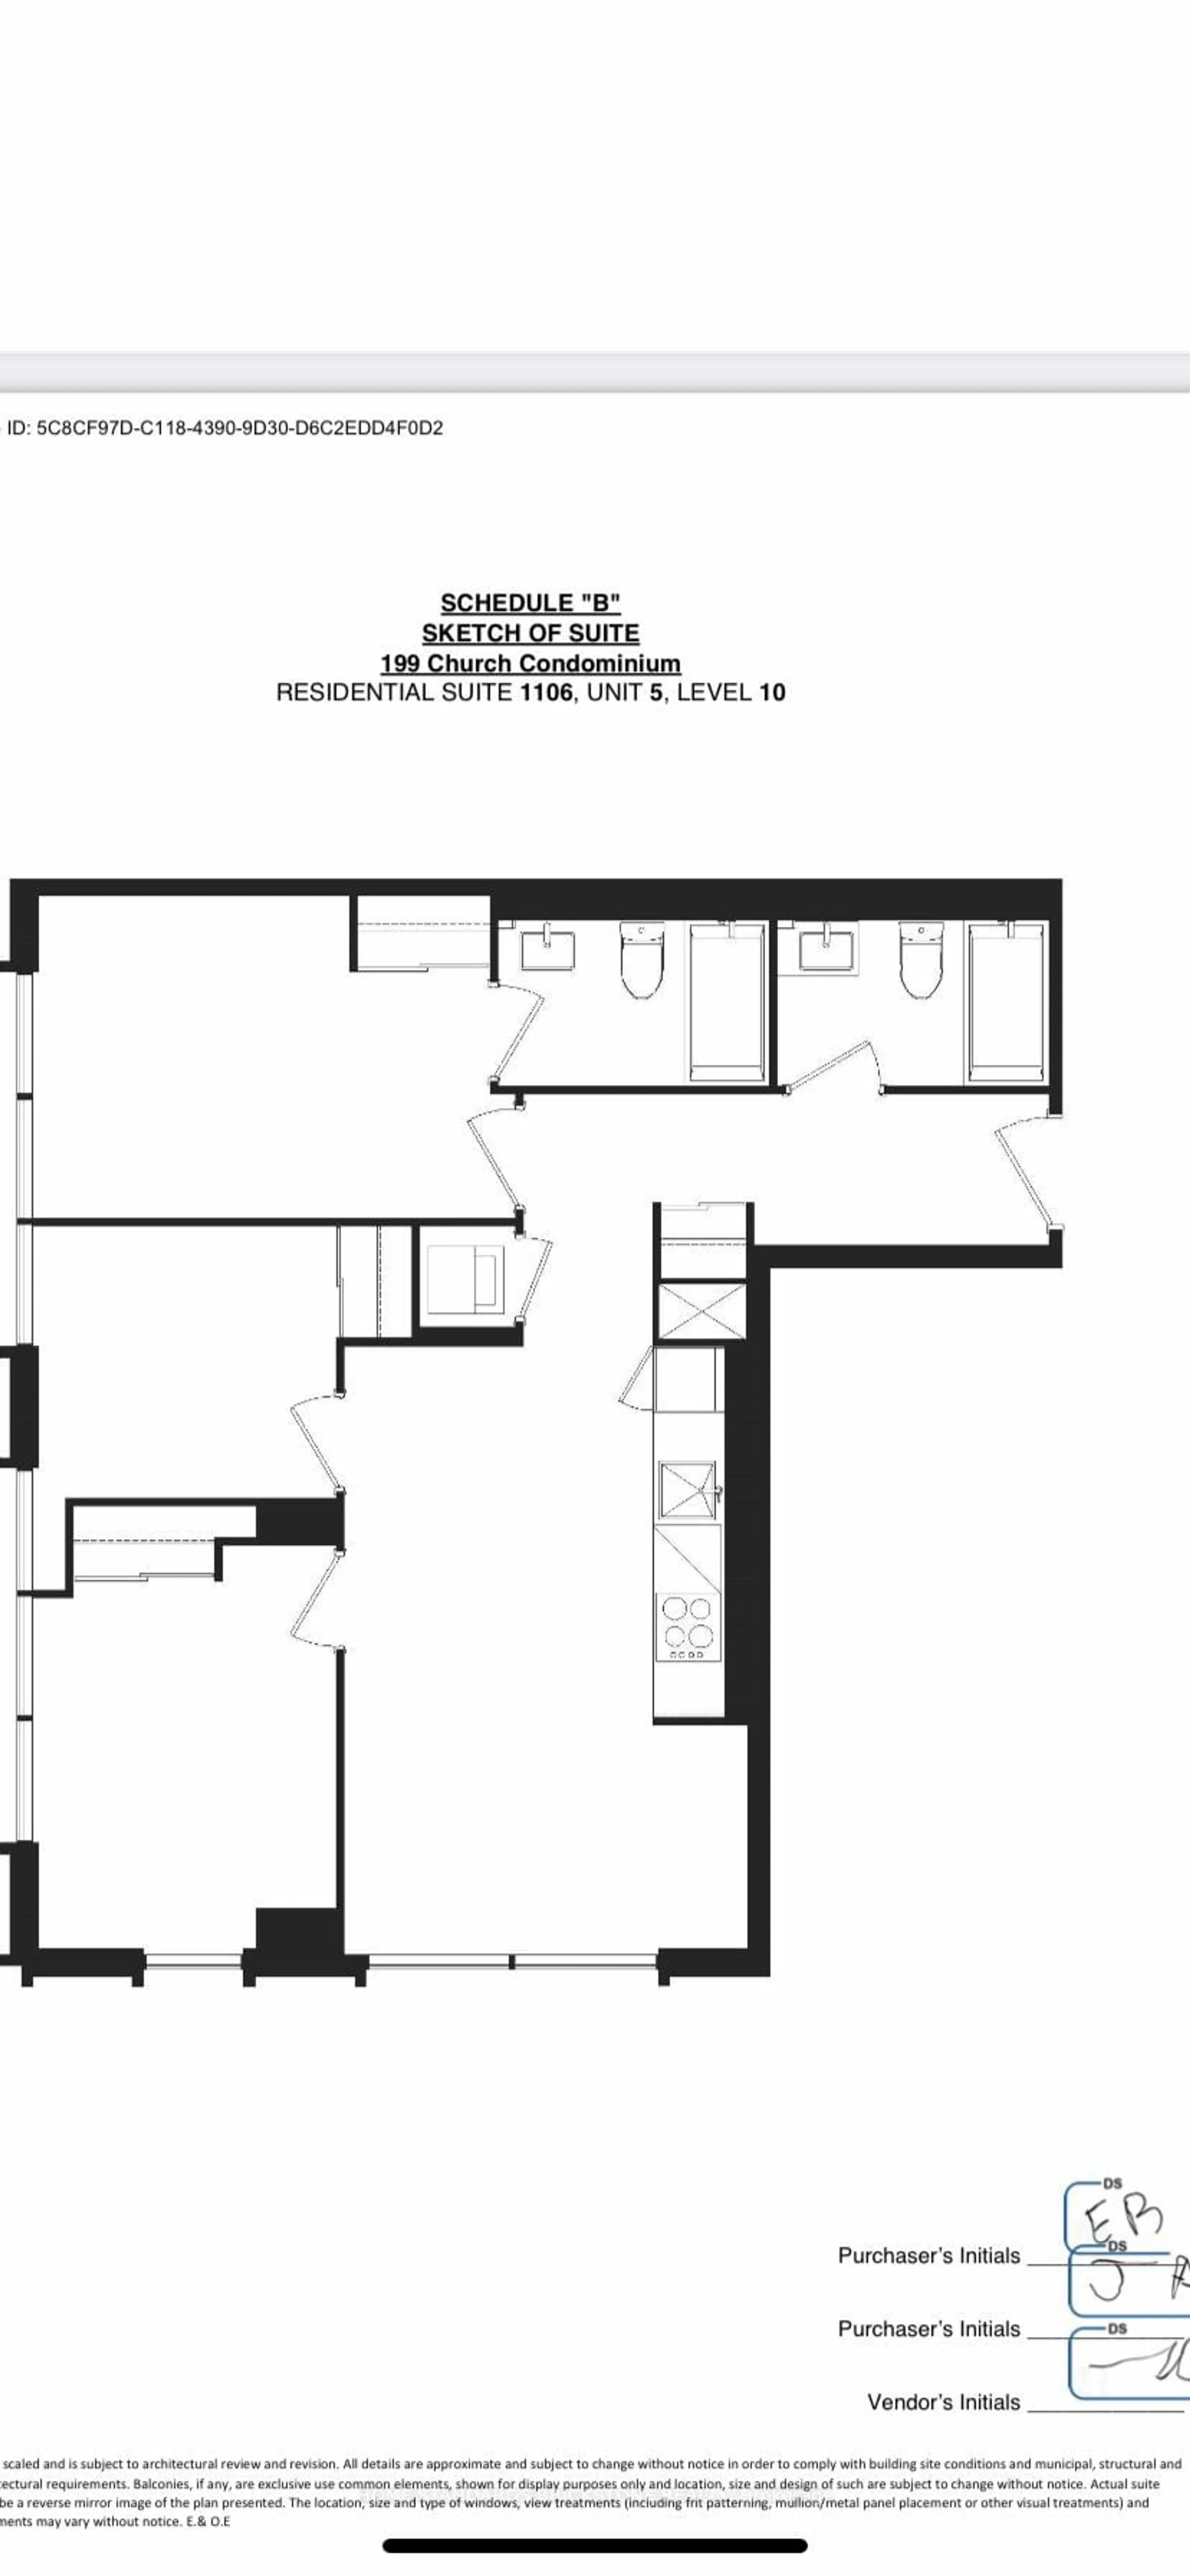 Floor plan for 82 Dalhousie St #1106, Toronto Ontario M5B 0C5